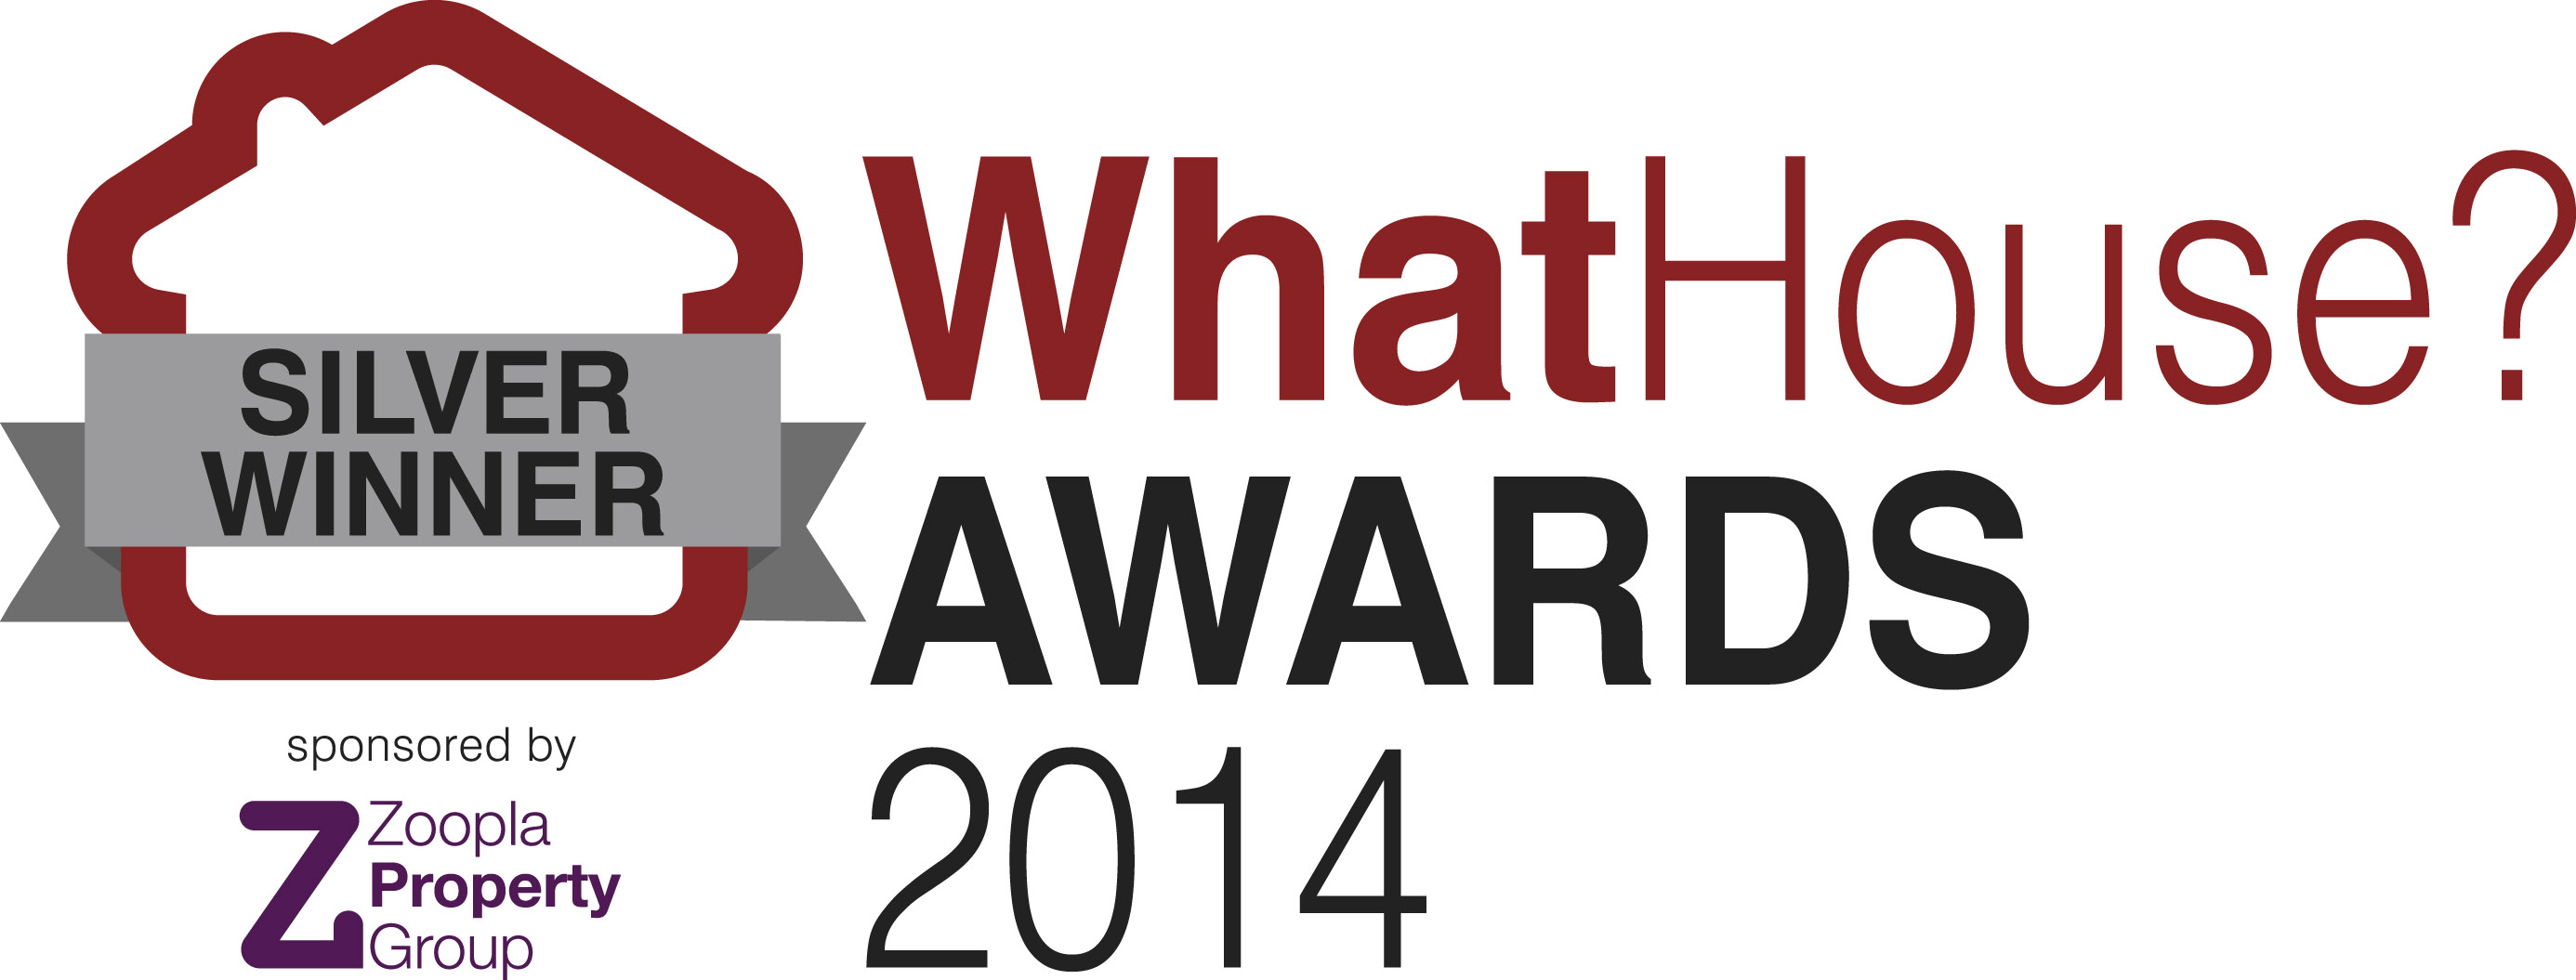 WhatHouse? Awards Winner Silver 2014